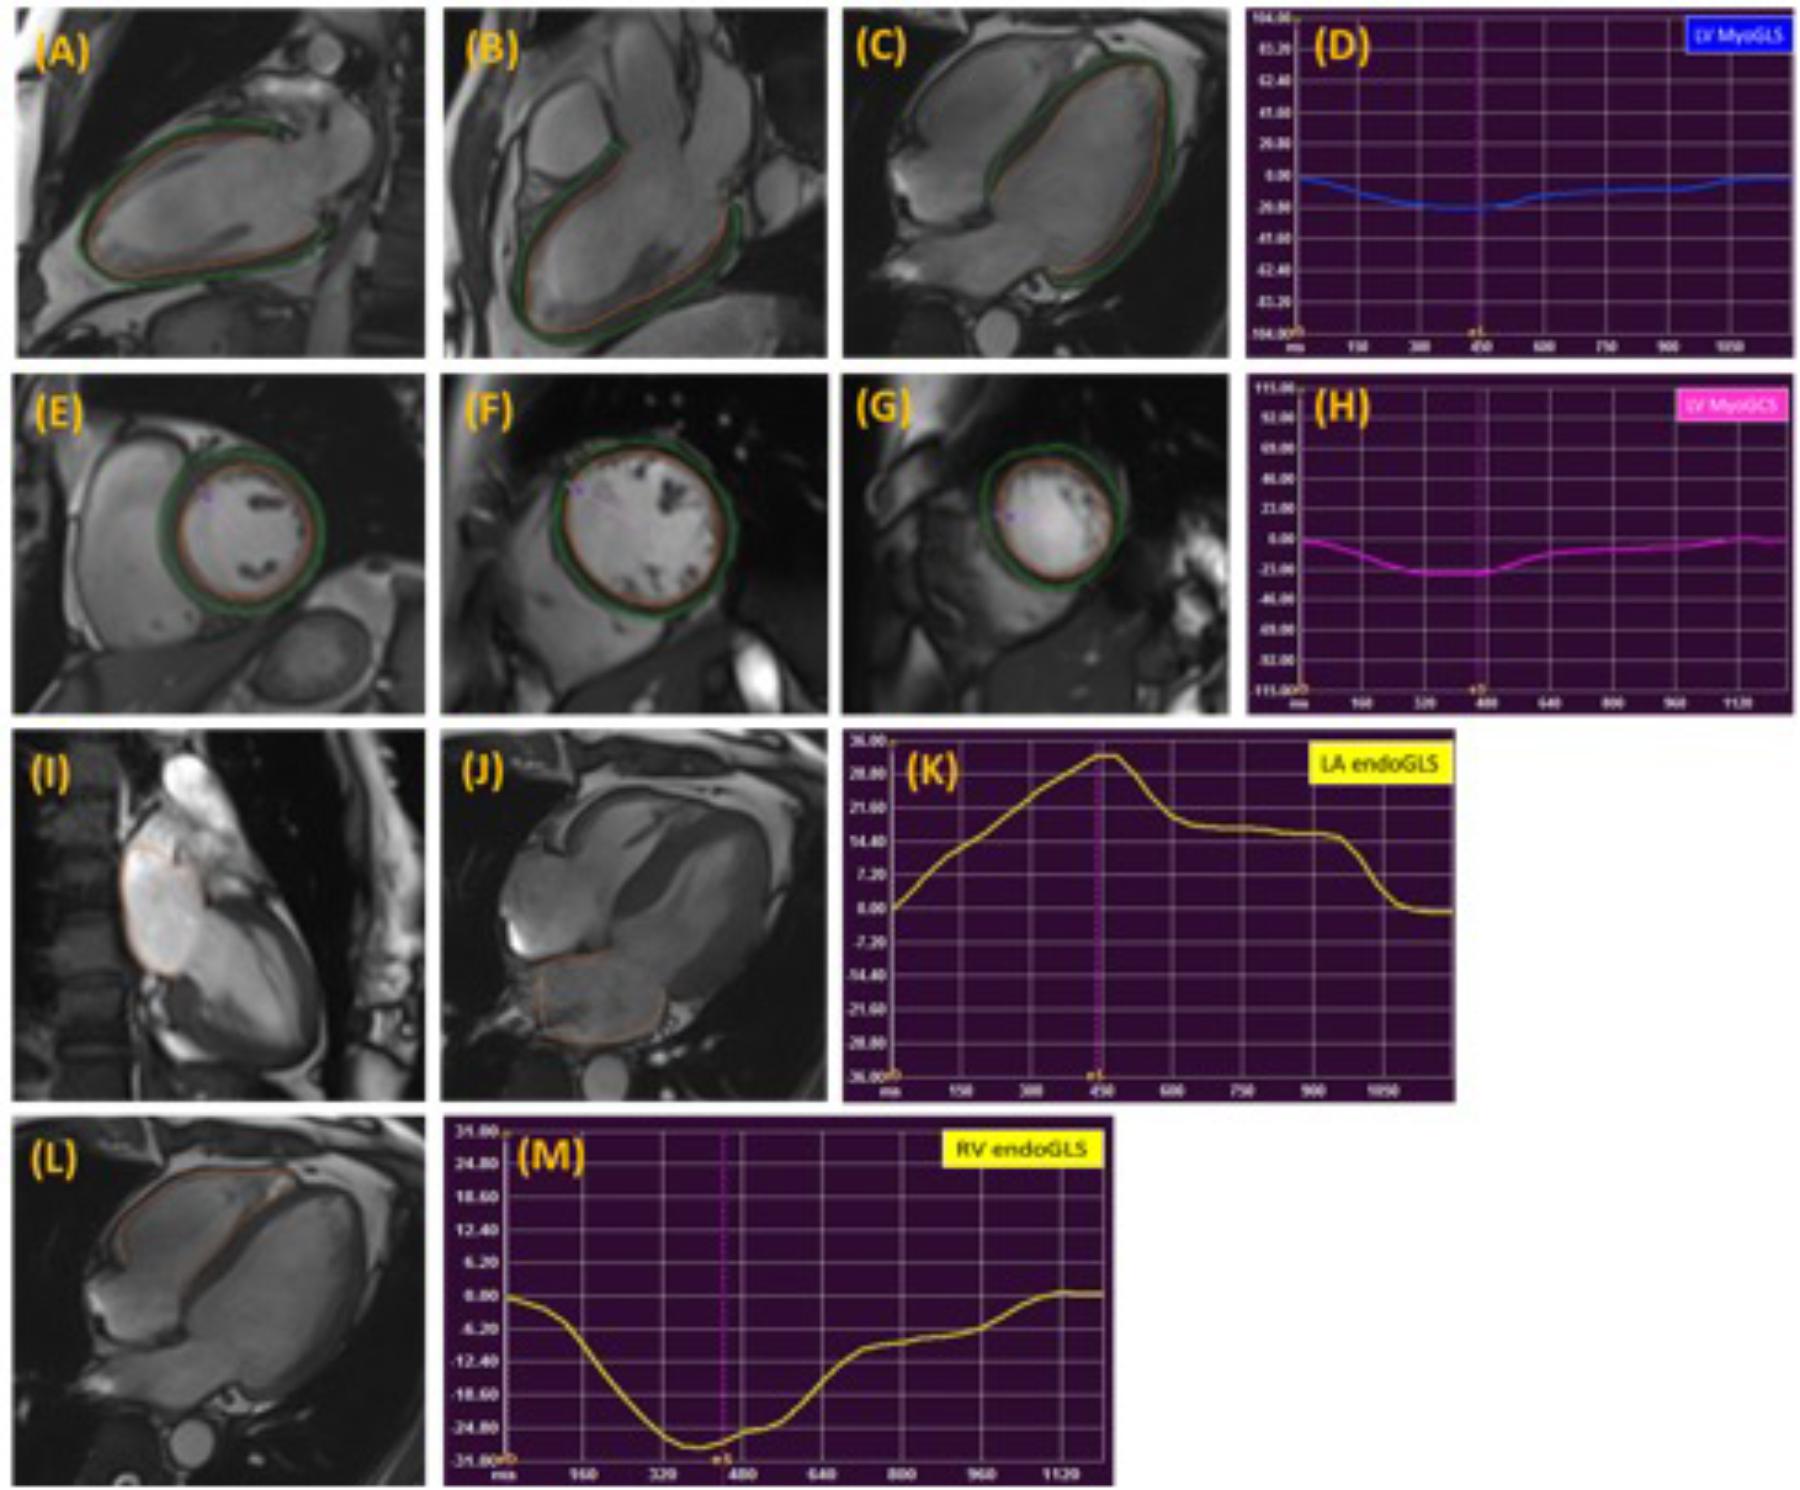 Strain imaging using cardiac magnetic resonance